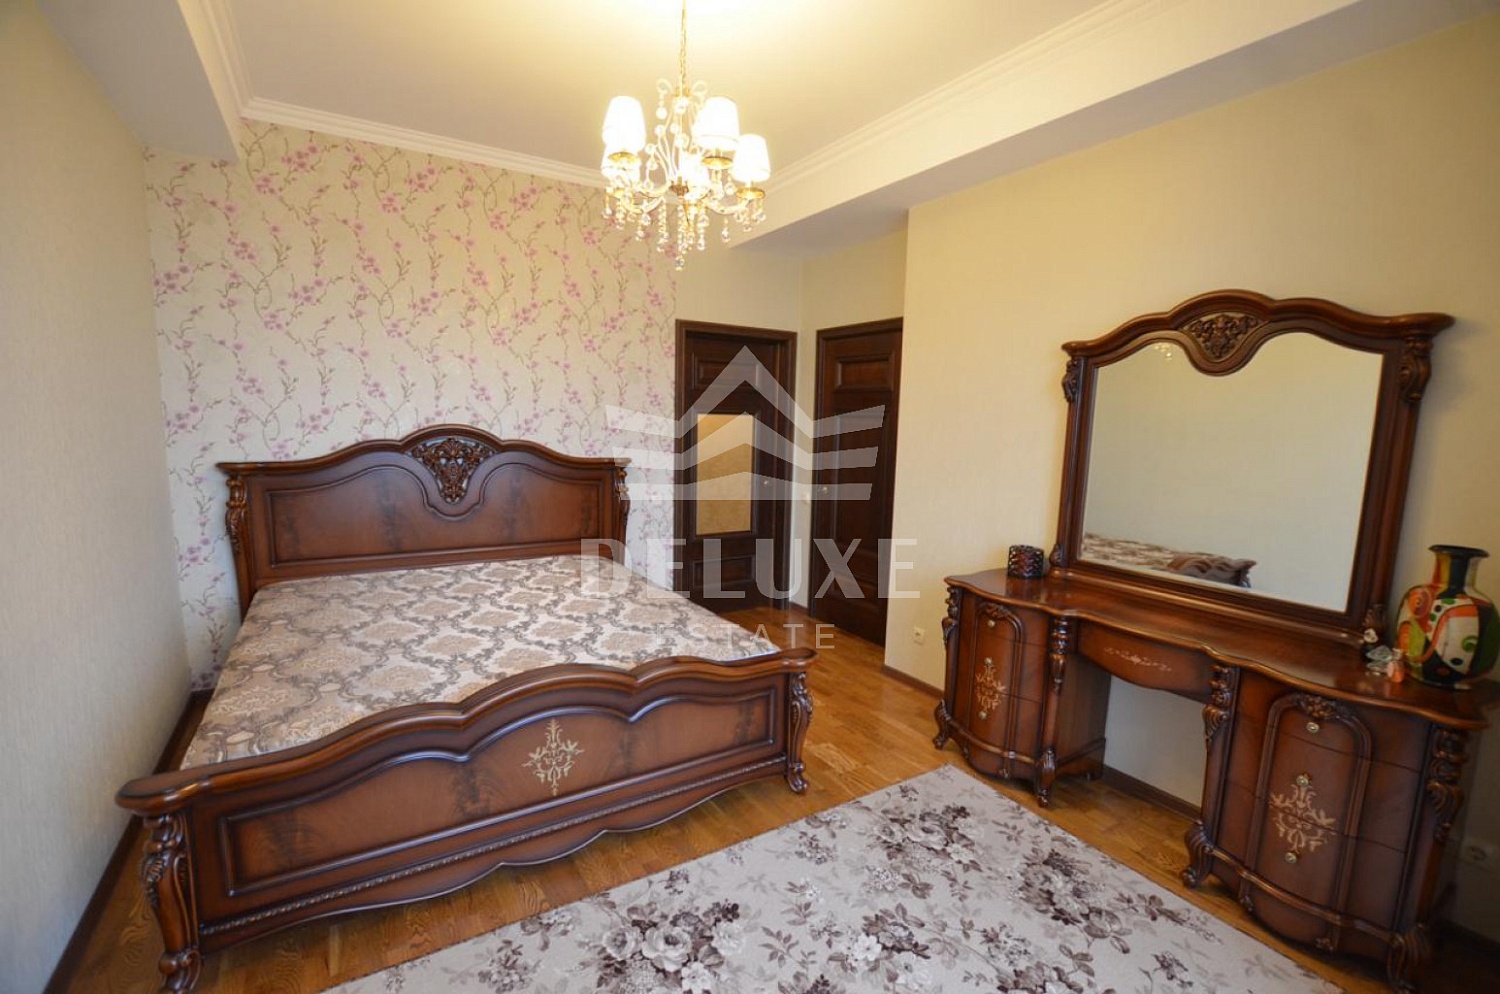 3-комнатная квартира с видом на море в центре Ялты в ЖК «Московский»